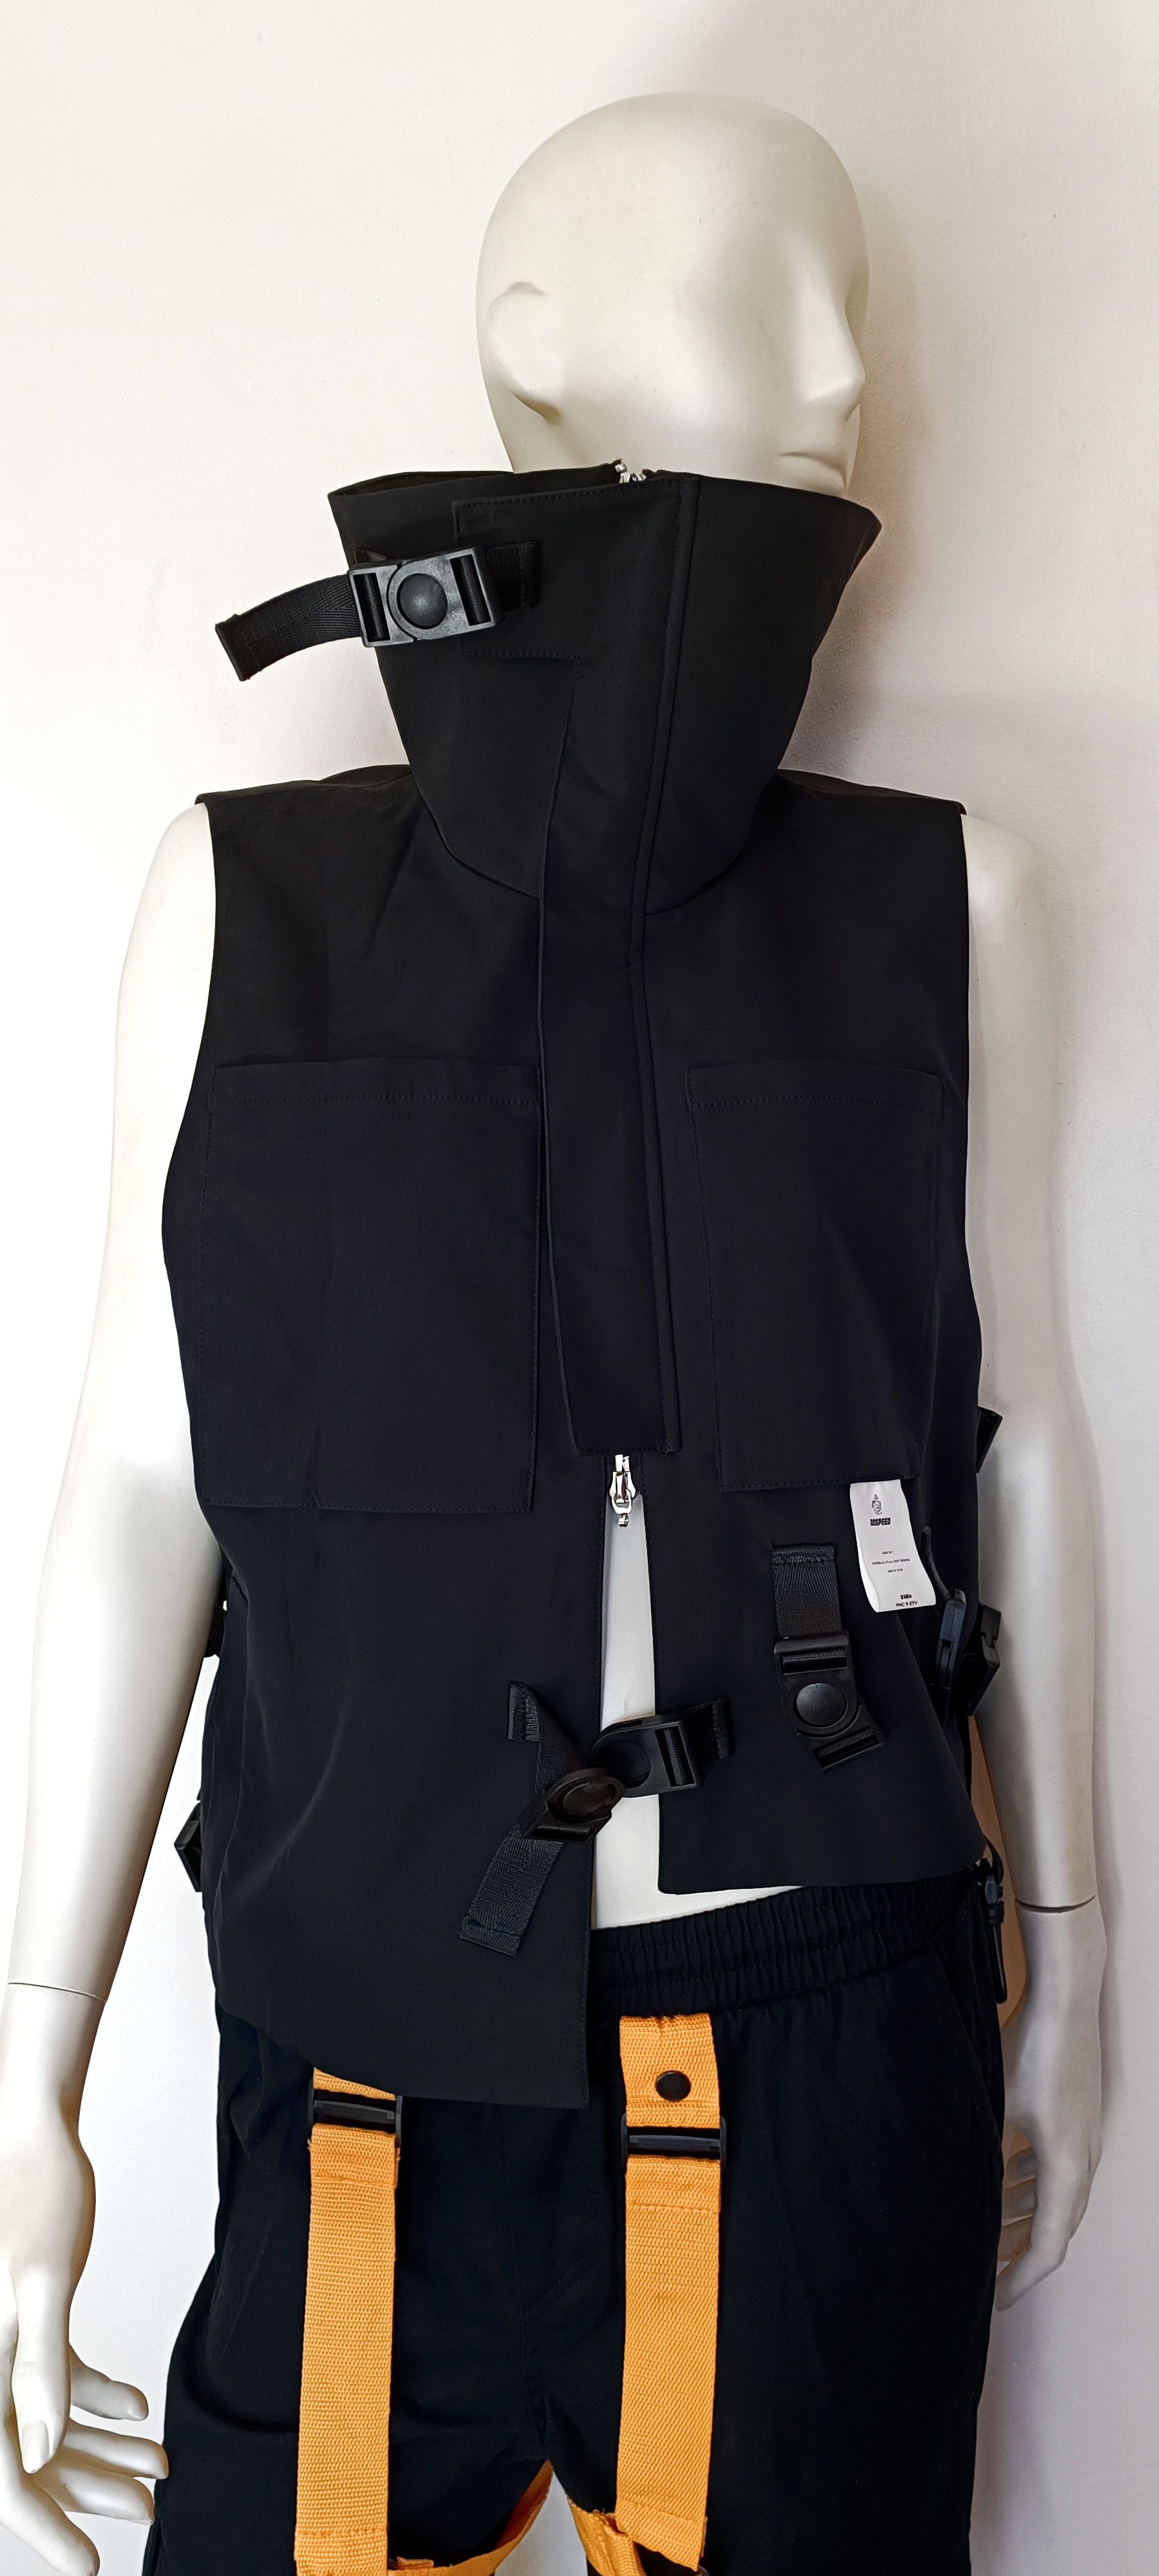 Avant Garde - Avant-Garde Adjustable Tactical Vest by ONSPEED - 17